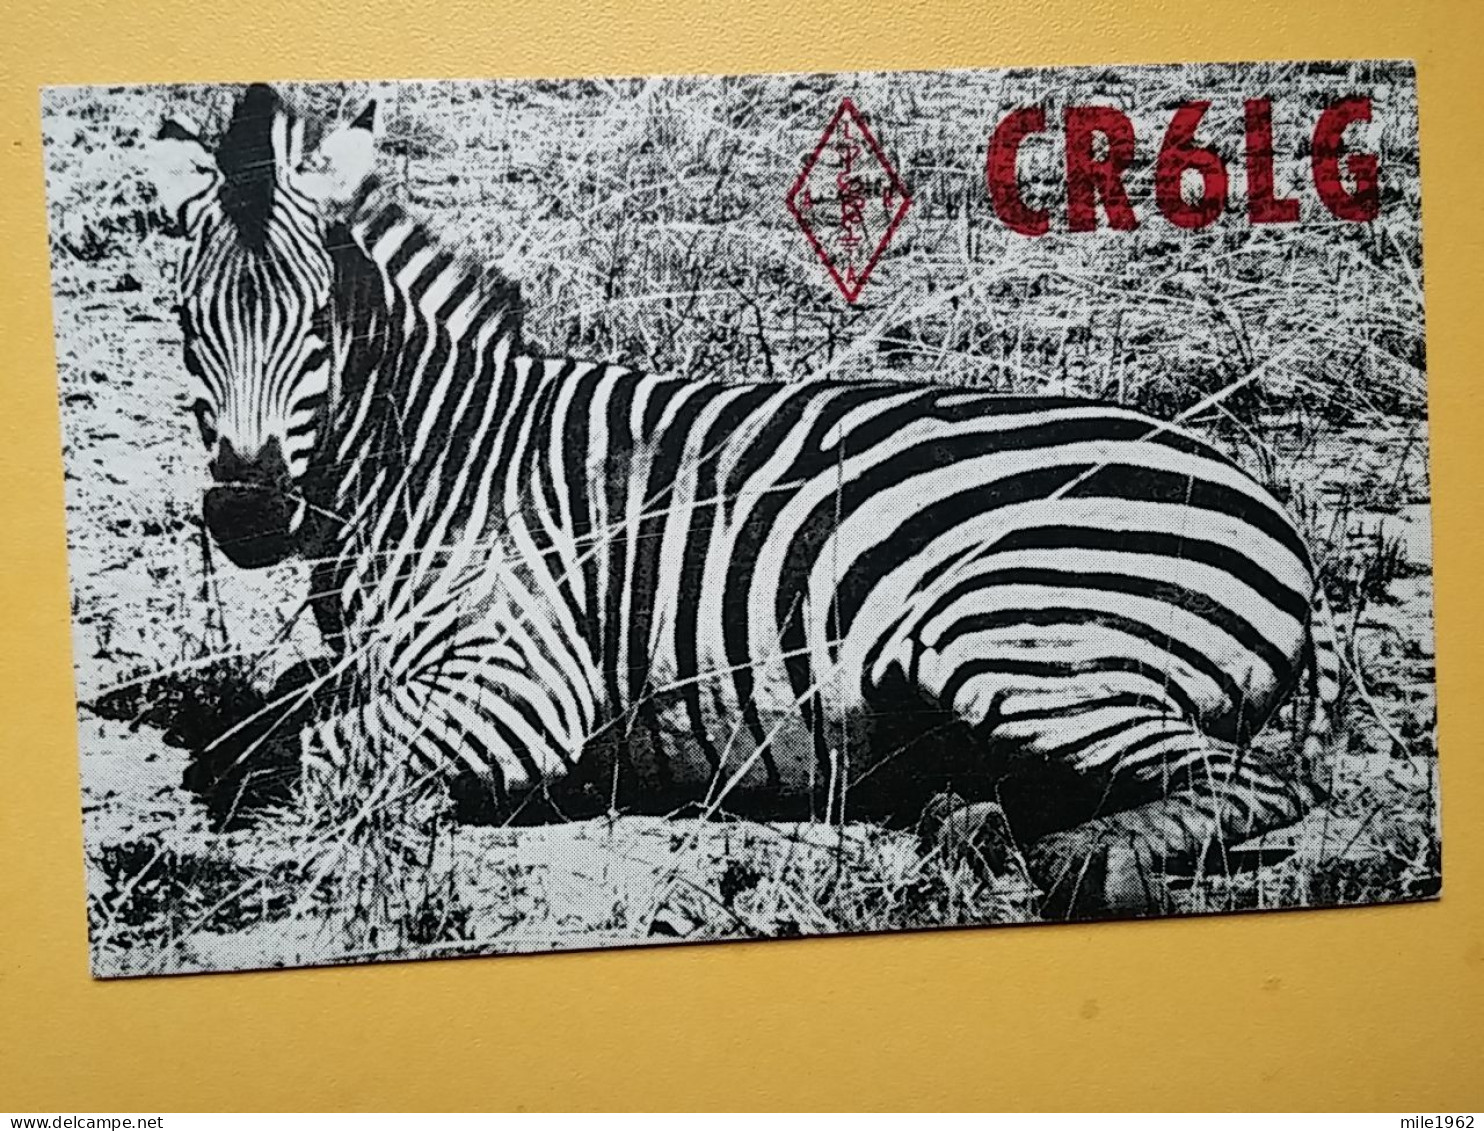 KOV 506-48 - ZEBRA, LUANDA RADIO AMATEUR - Zebras